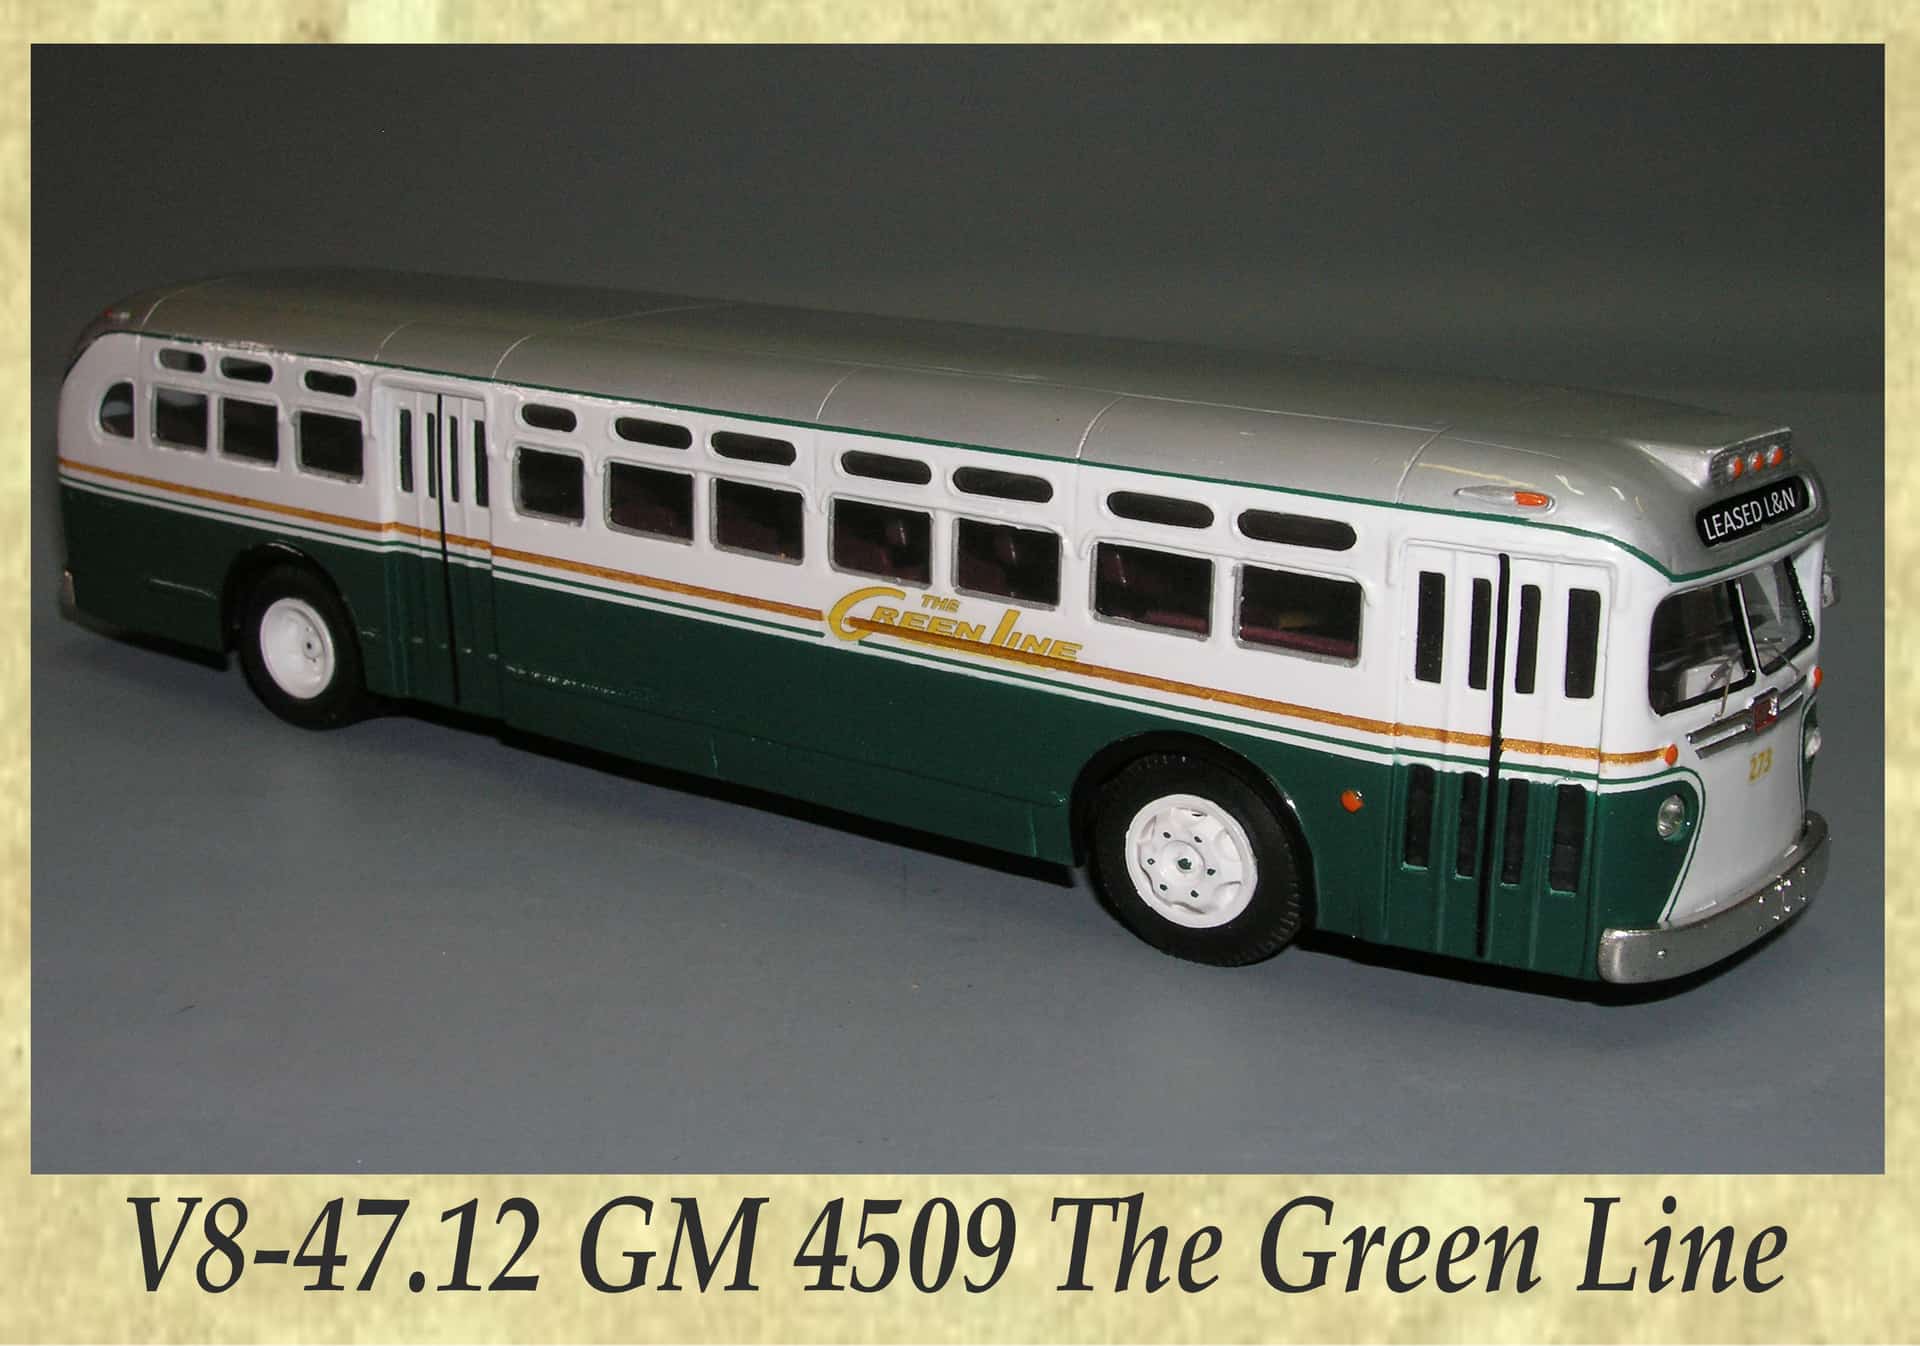 V8-47.12 GM 4509 The Green Line